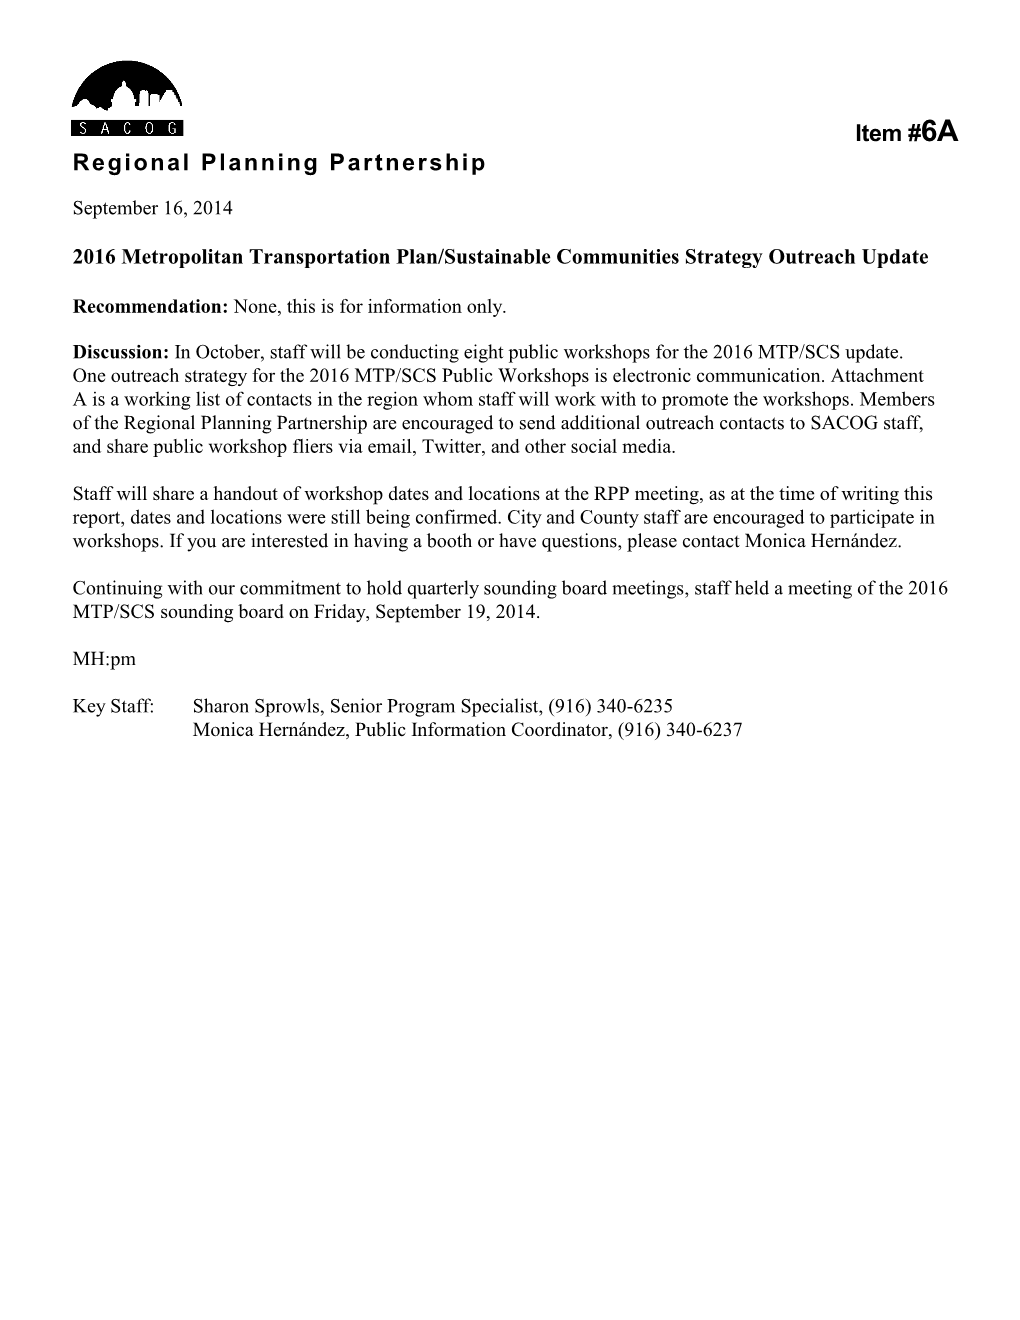 Item #6A Regional Planning Partnership